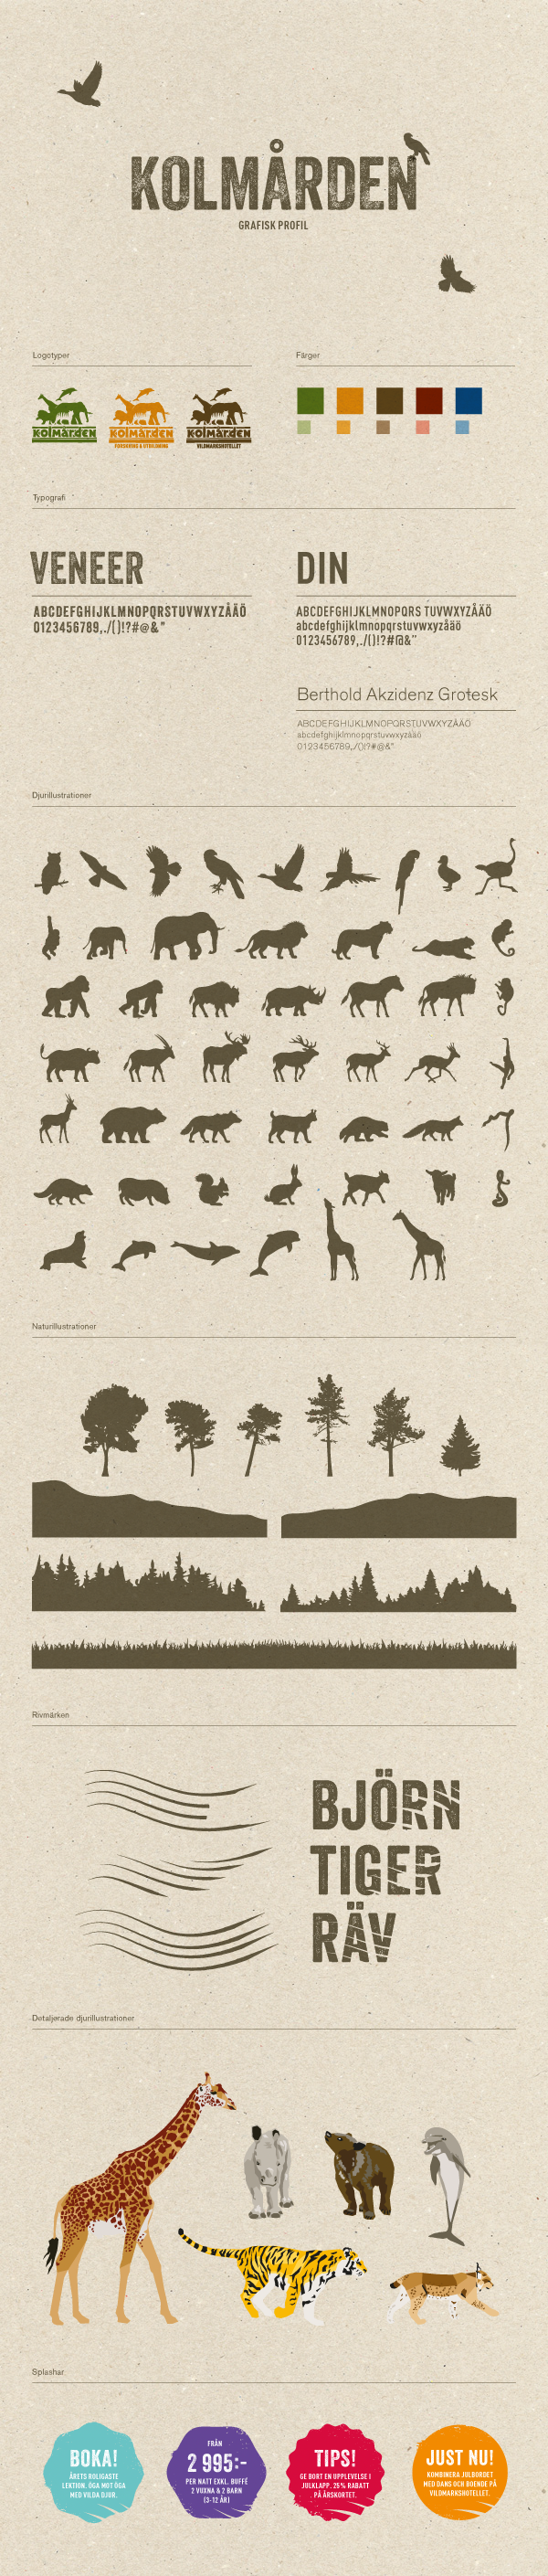 kolmården identity illustrations animals zoo Nature graphic profile graphic identity wild Djurpark